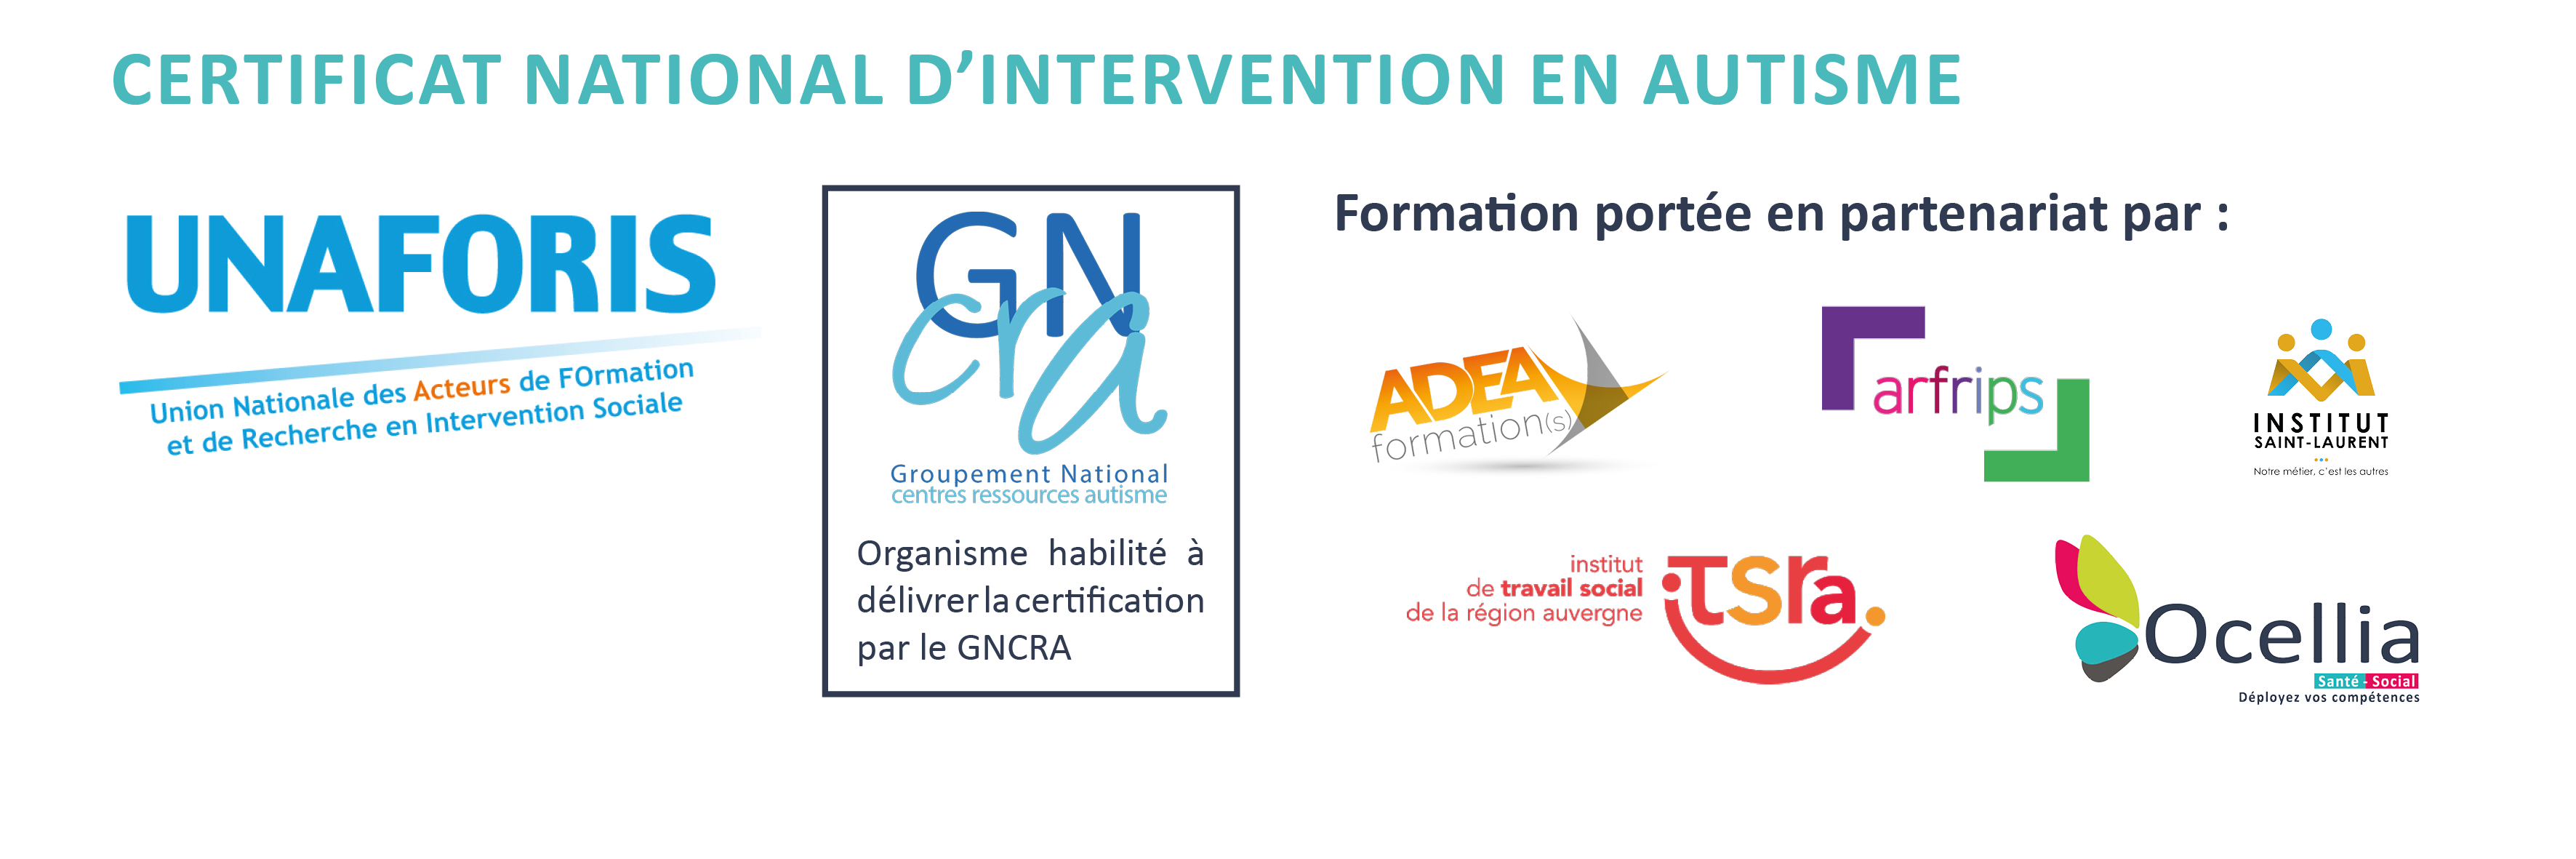 Logos des partenaires du CNIA